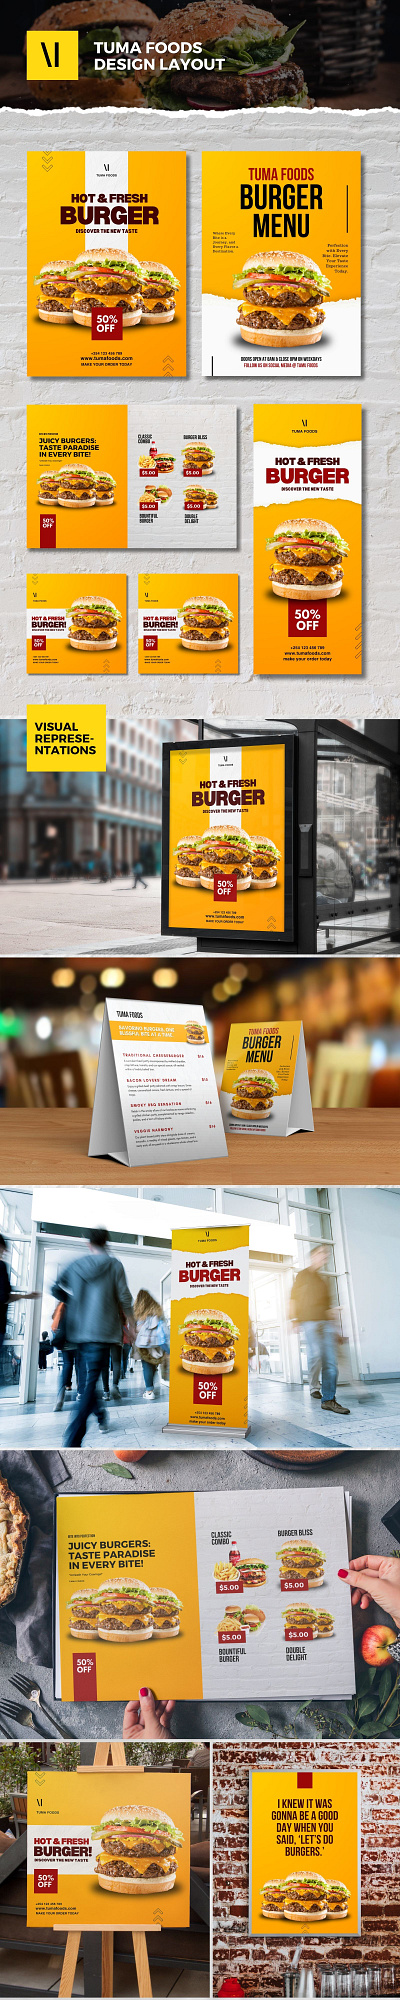 BURGER DESIGN PACKAGE LAYOUT brand ide brand identity branding burger posters fast food flyers graphic design restaurant flyer design social media flyer design